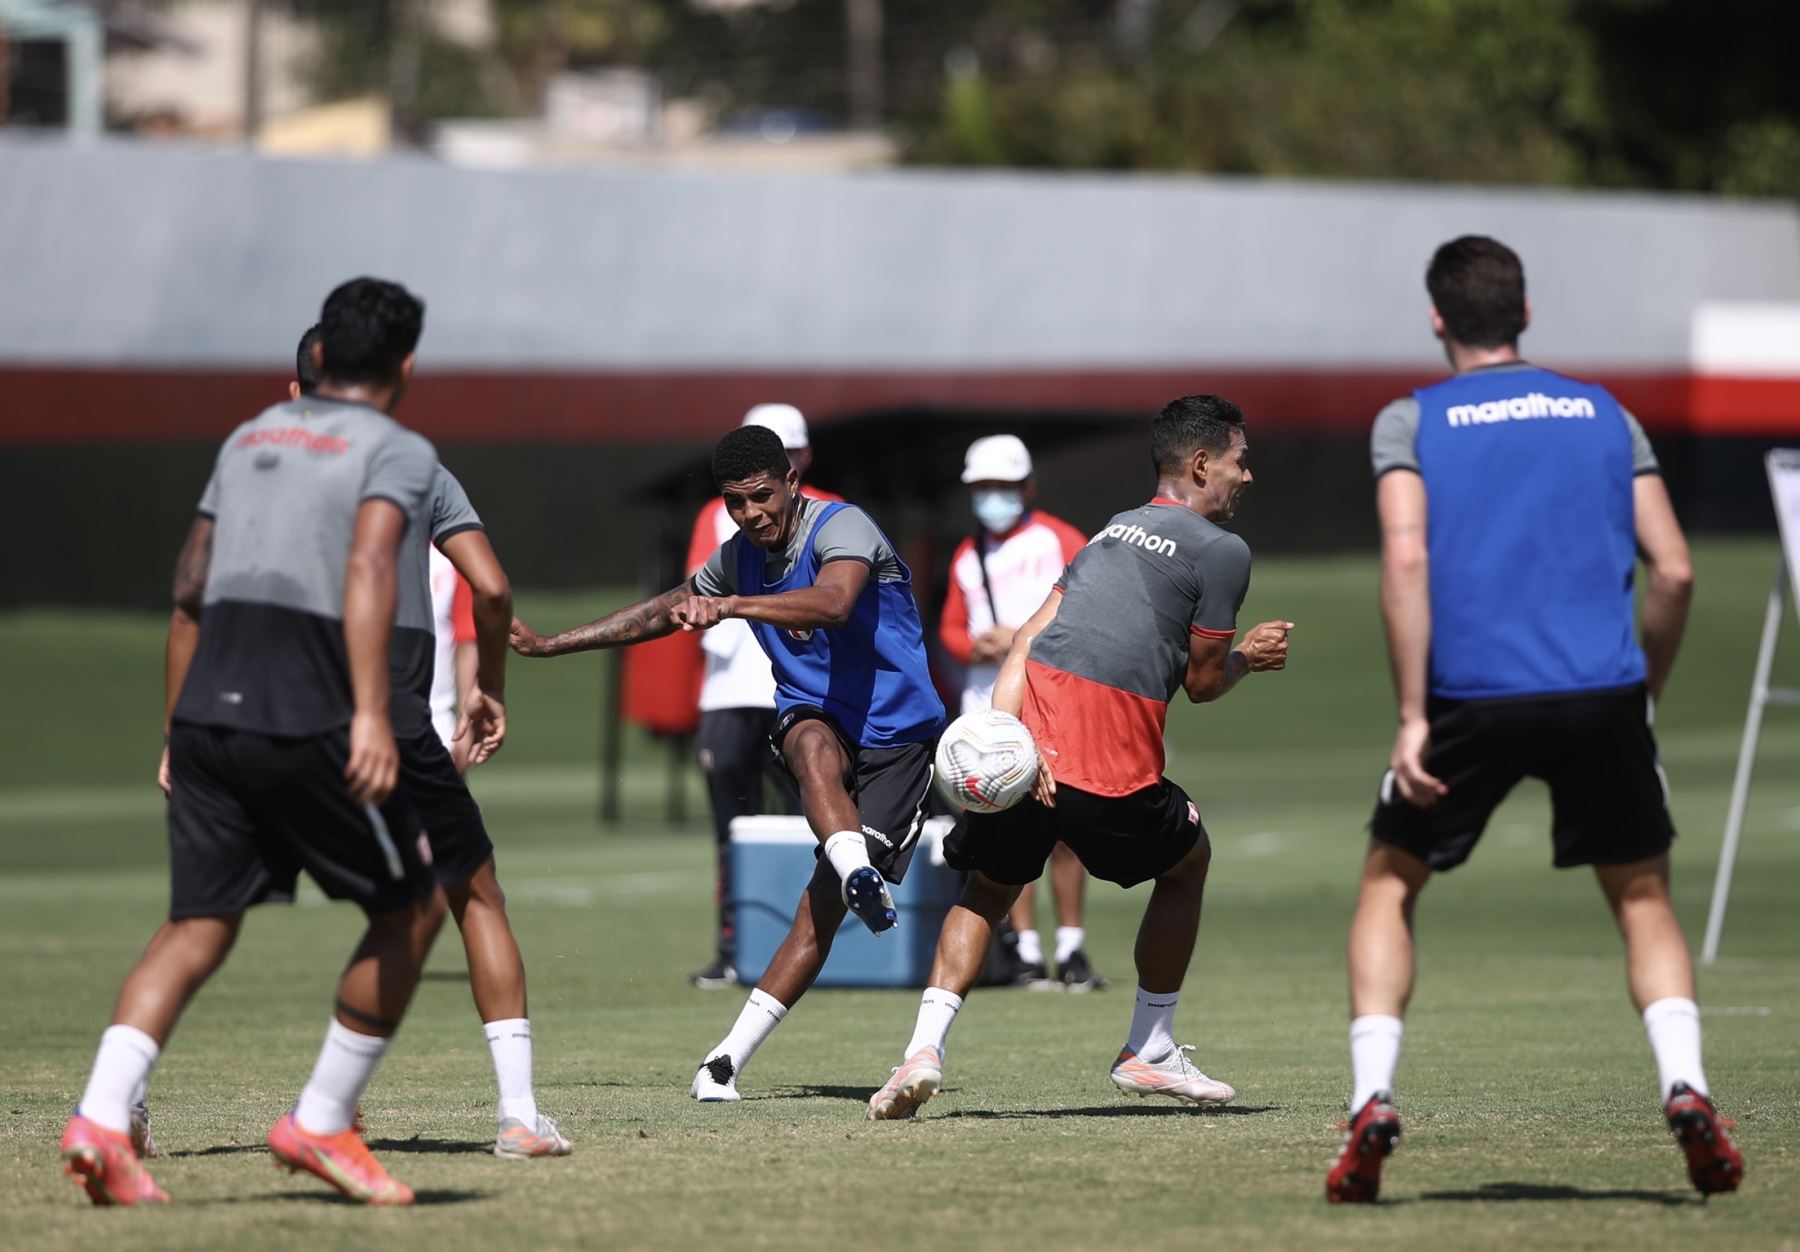 La selección peruana realizó su entrenamiento con miras a enfrentar mañana a Ecuador